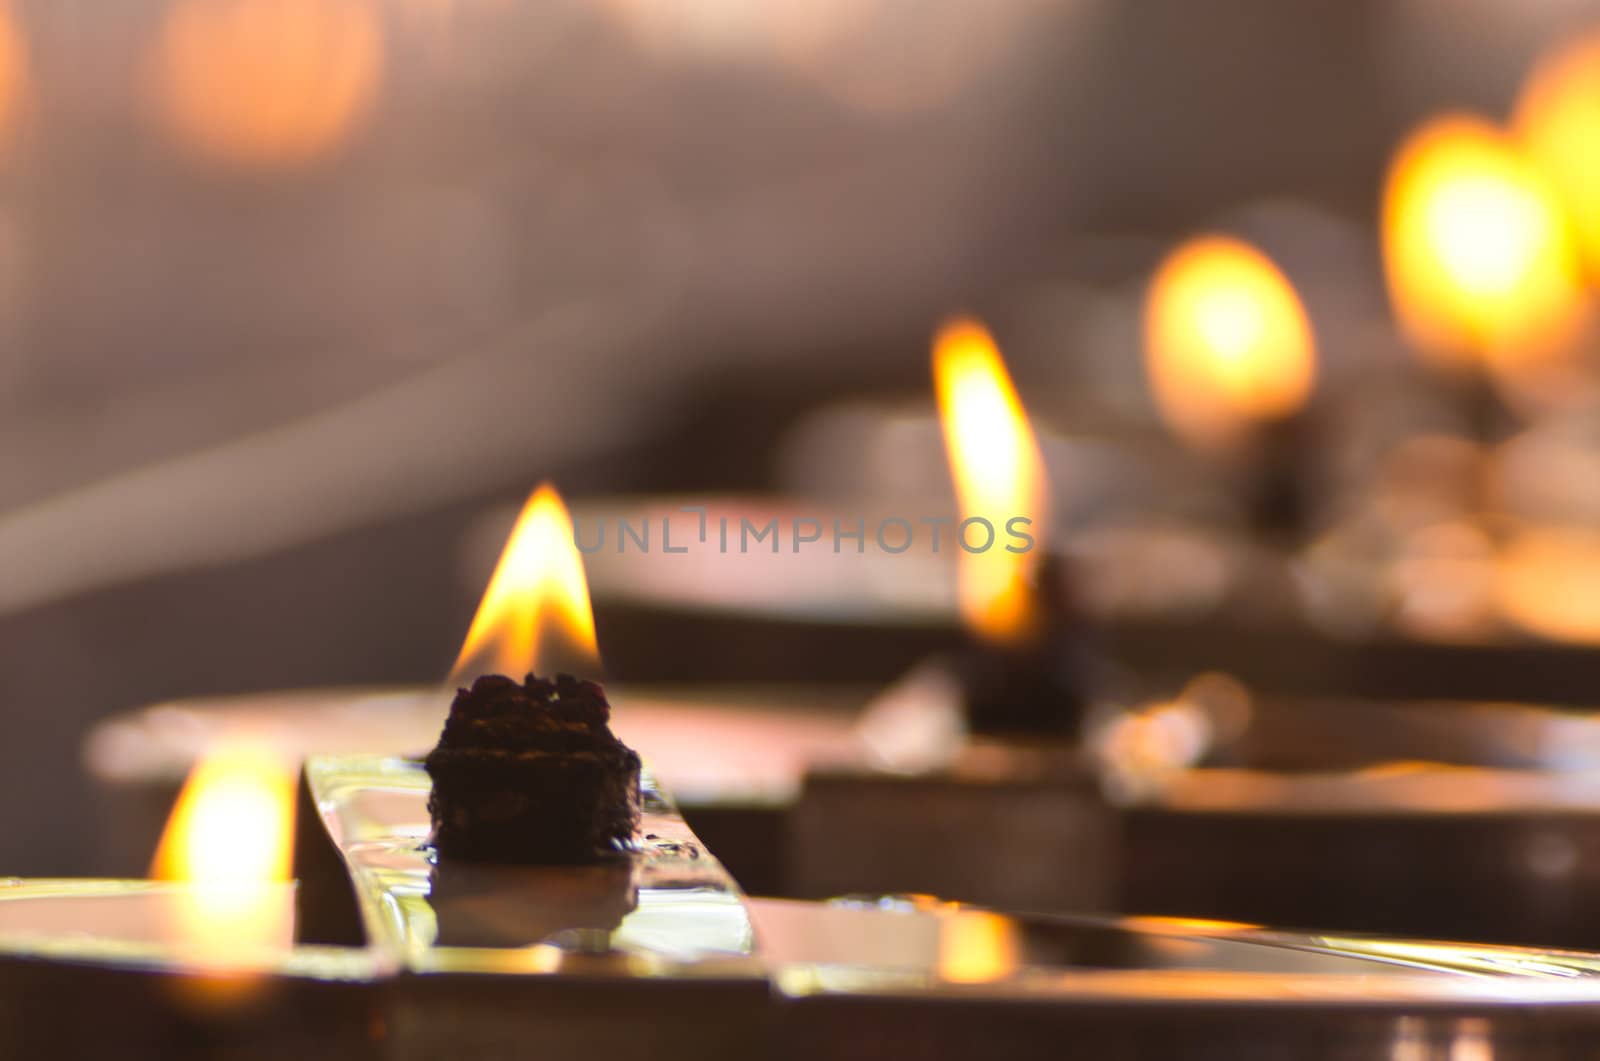 Group of burning candles on black background.